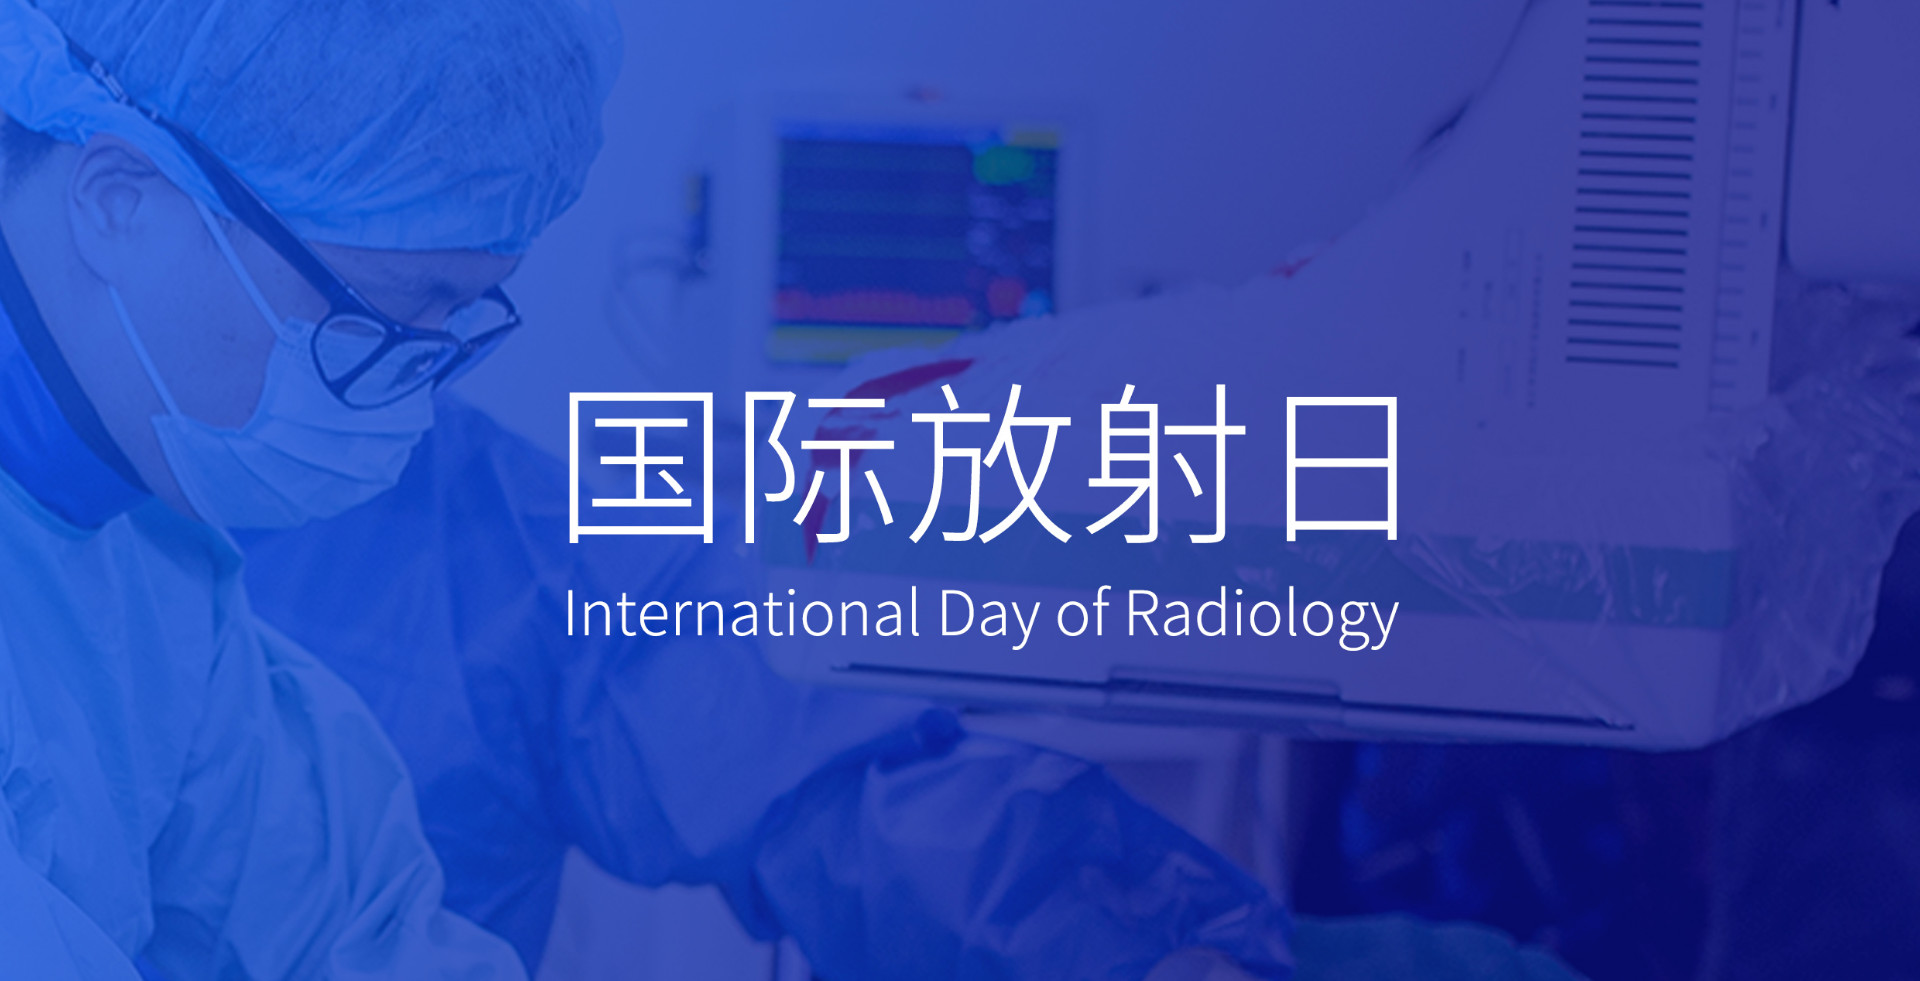 World Radiography Day 2021